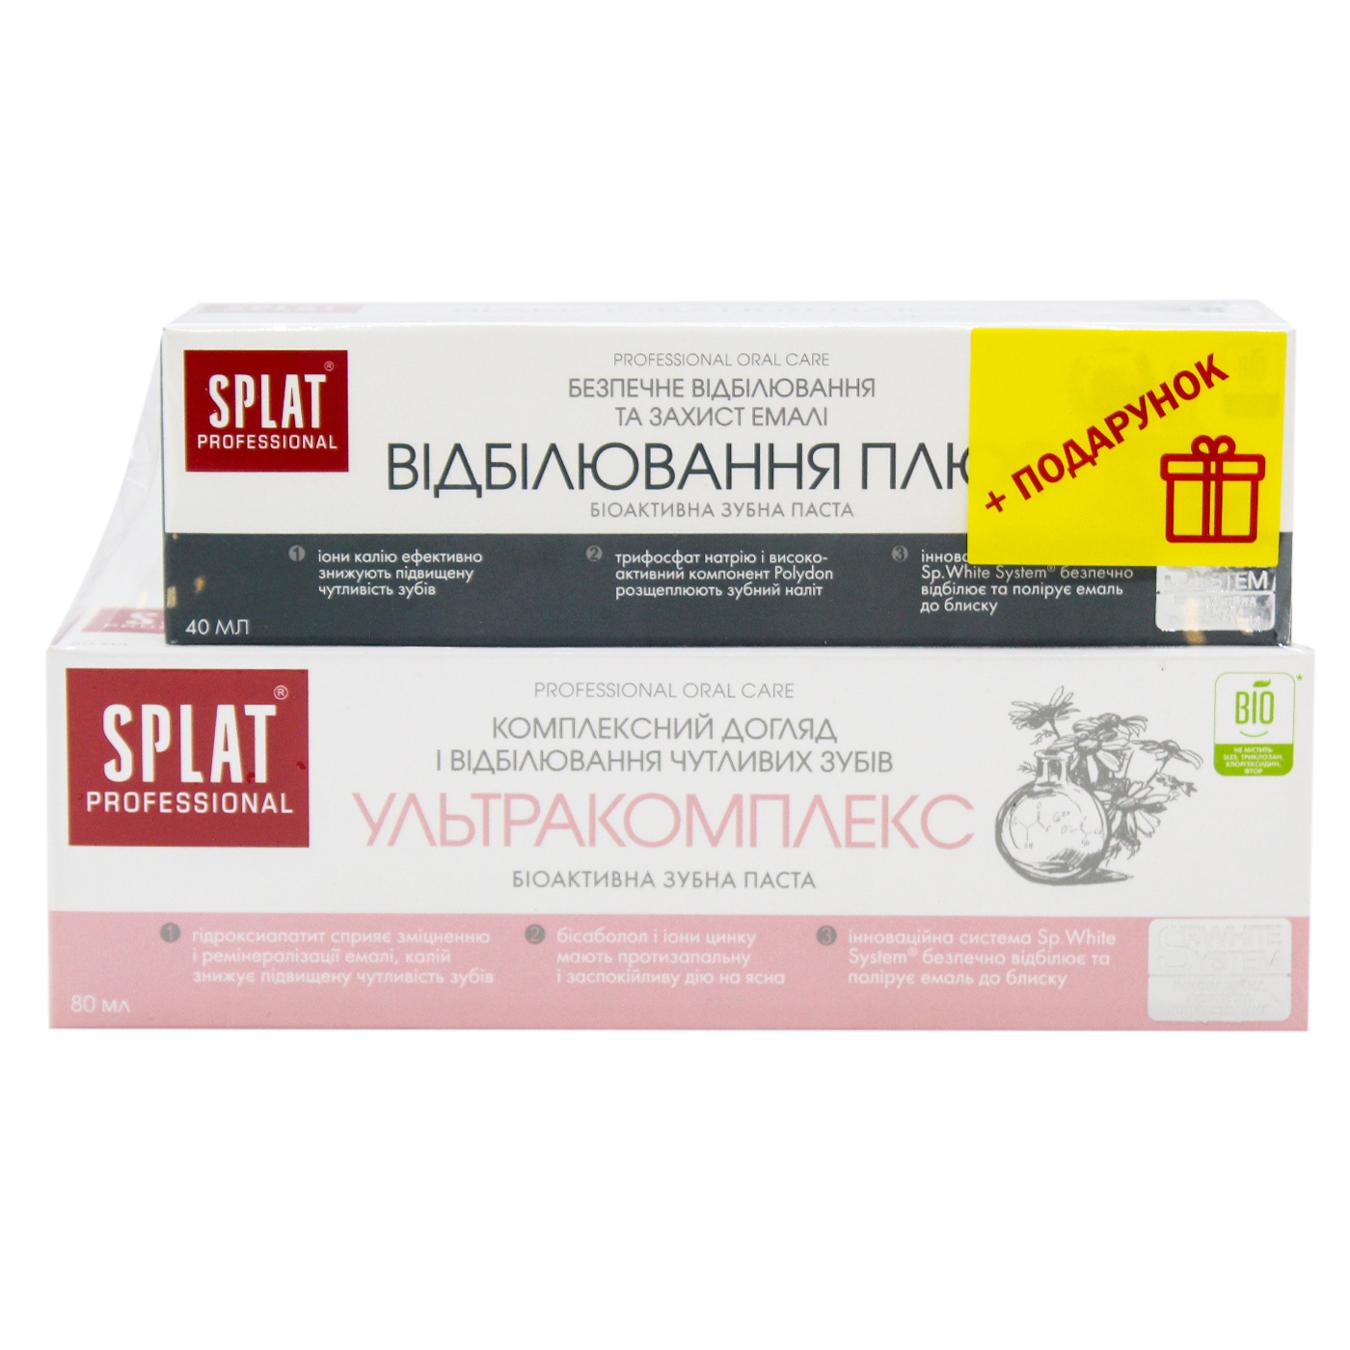 Зубная паста промонабор ultracomplex SPLAT 80мл + зубная паста отбеливание SPLAT 40мл